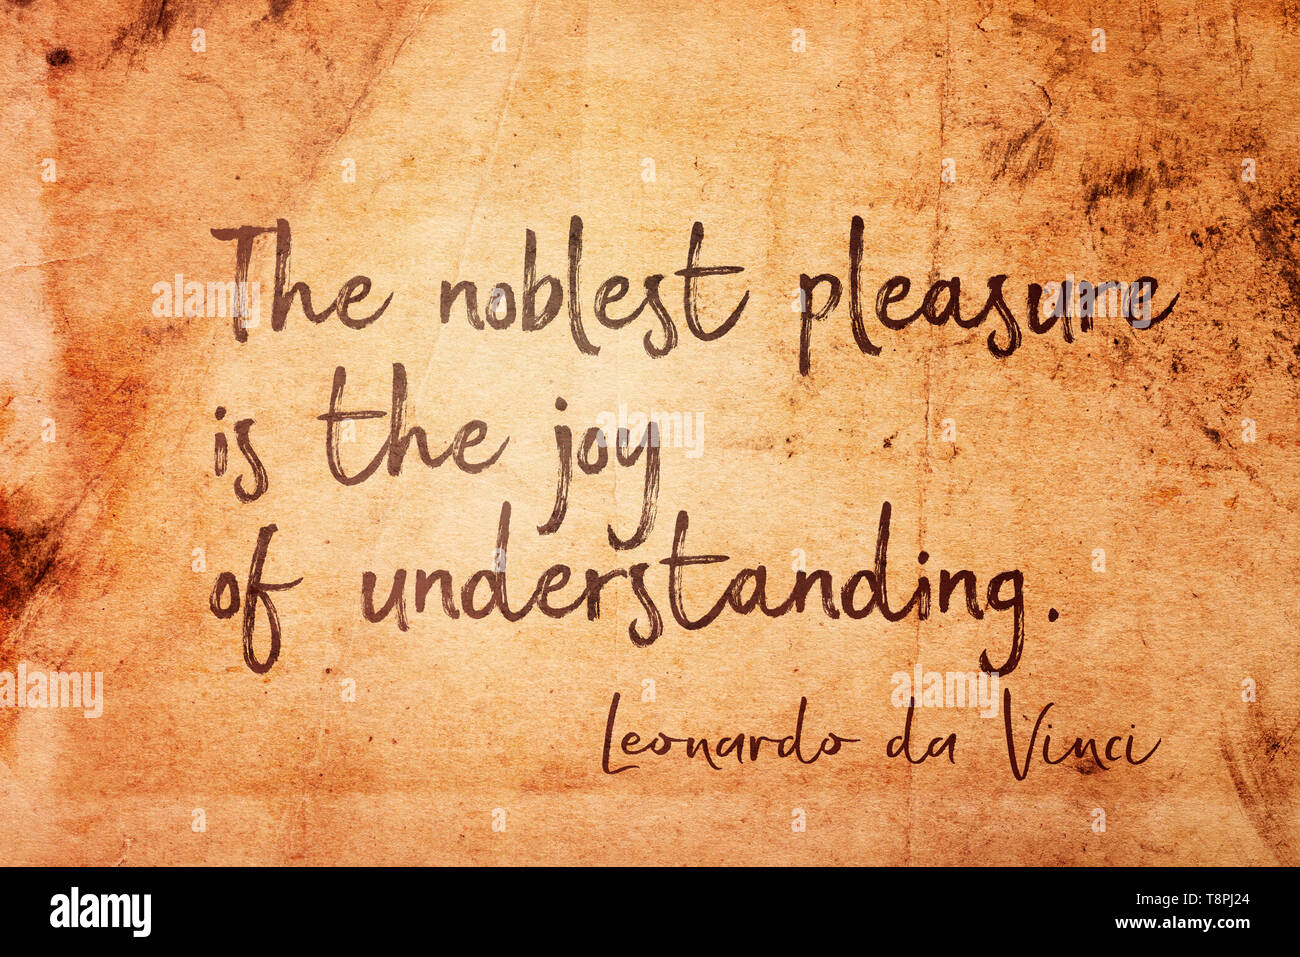 The noblest pleasure is the joy of understanding - ancient Italian artist Leonardo da Vinci quote printed on vintage grunge paper Stock Photo